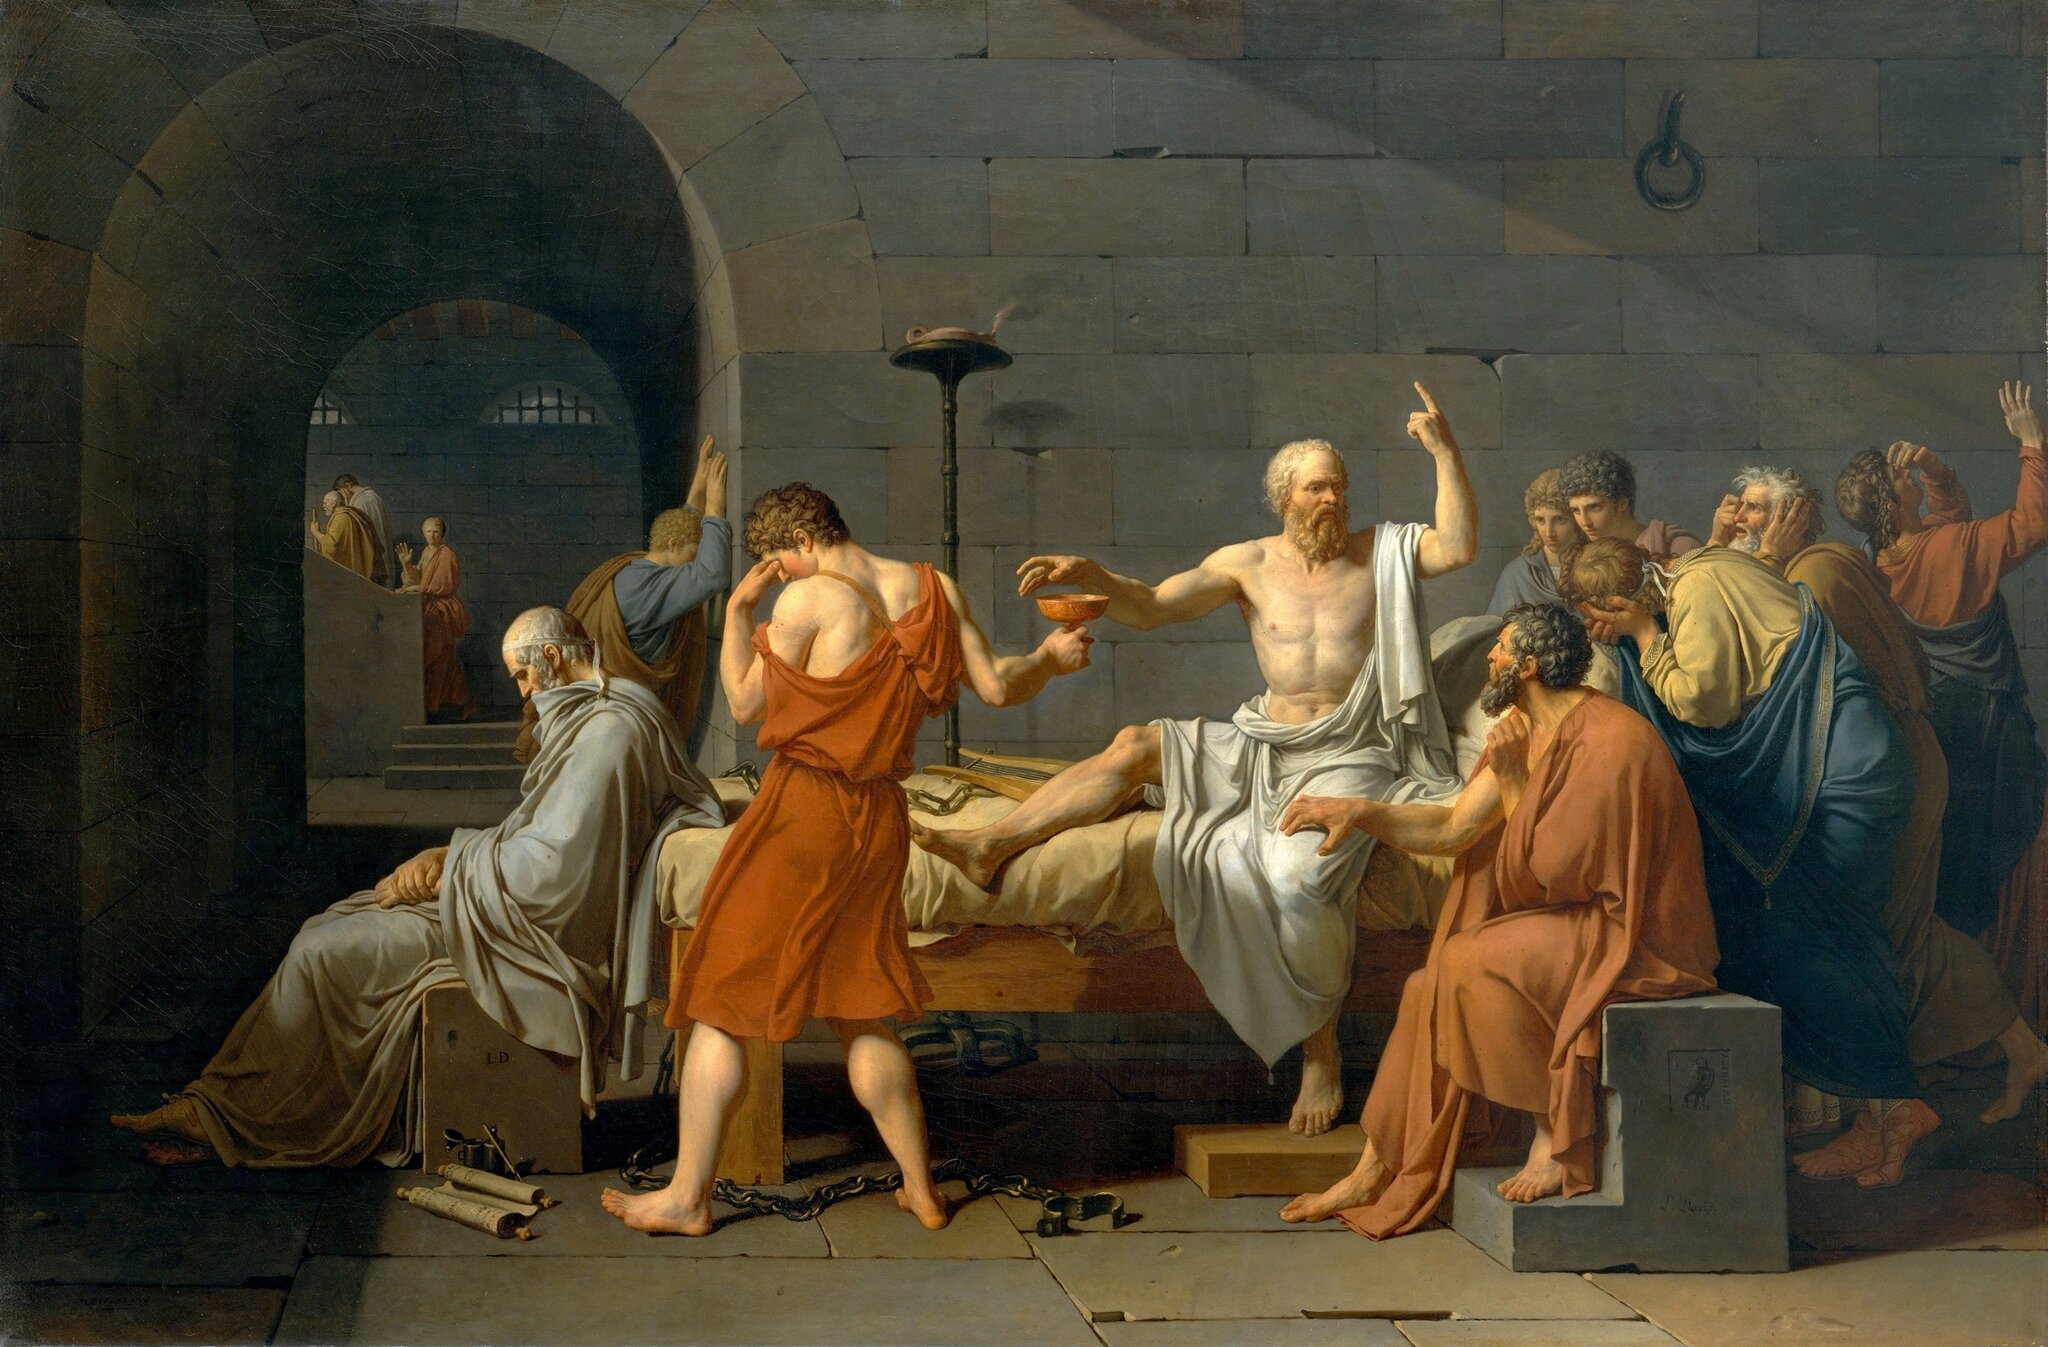 Śmierć Sokratesa Źródło: Jacques-Louis David, Śmierć Sokratesa, 1787, domena publiczna.